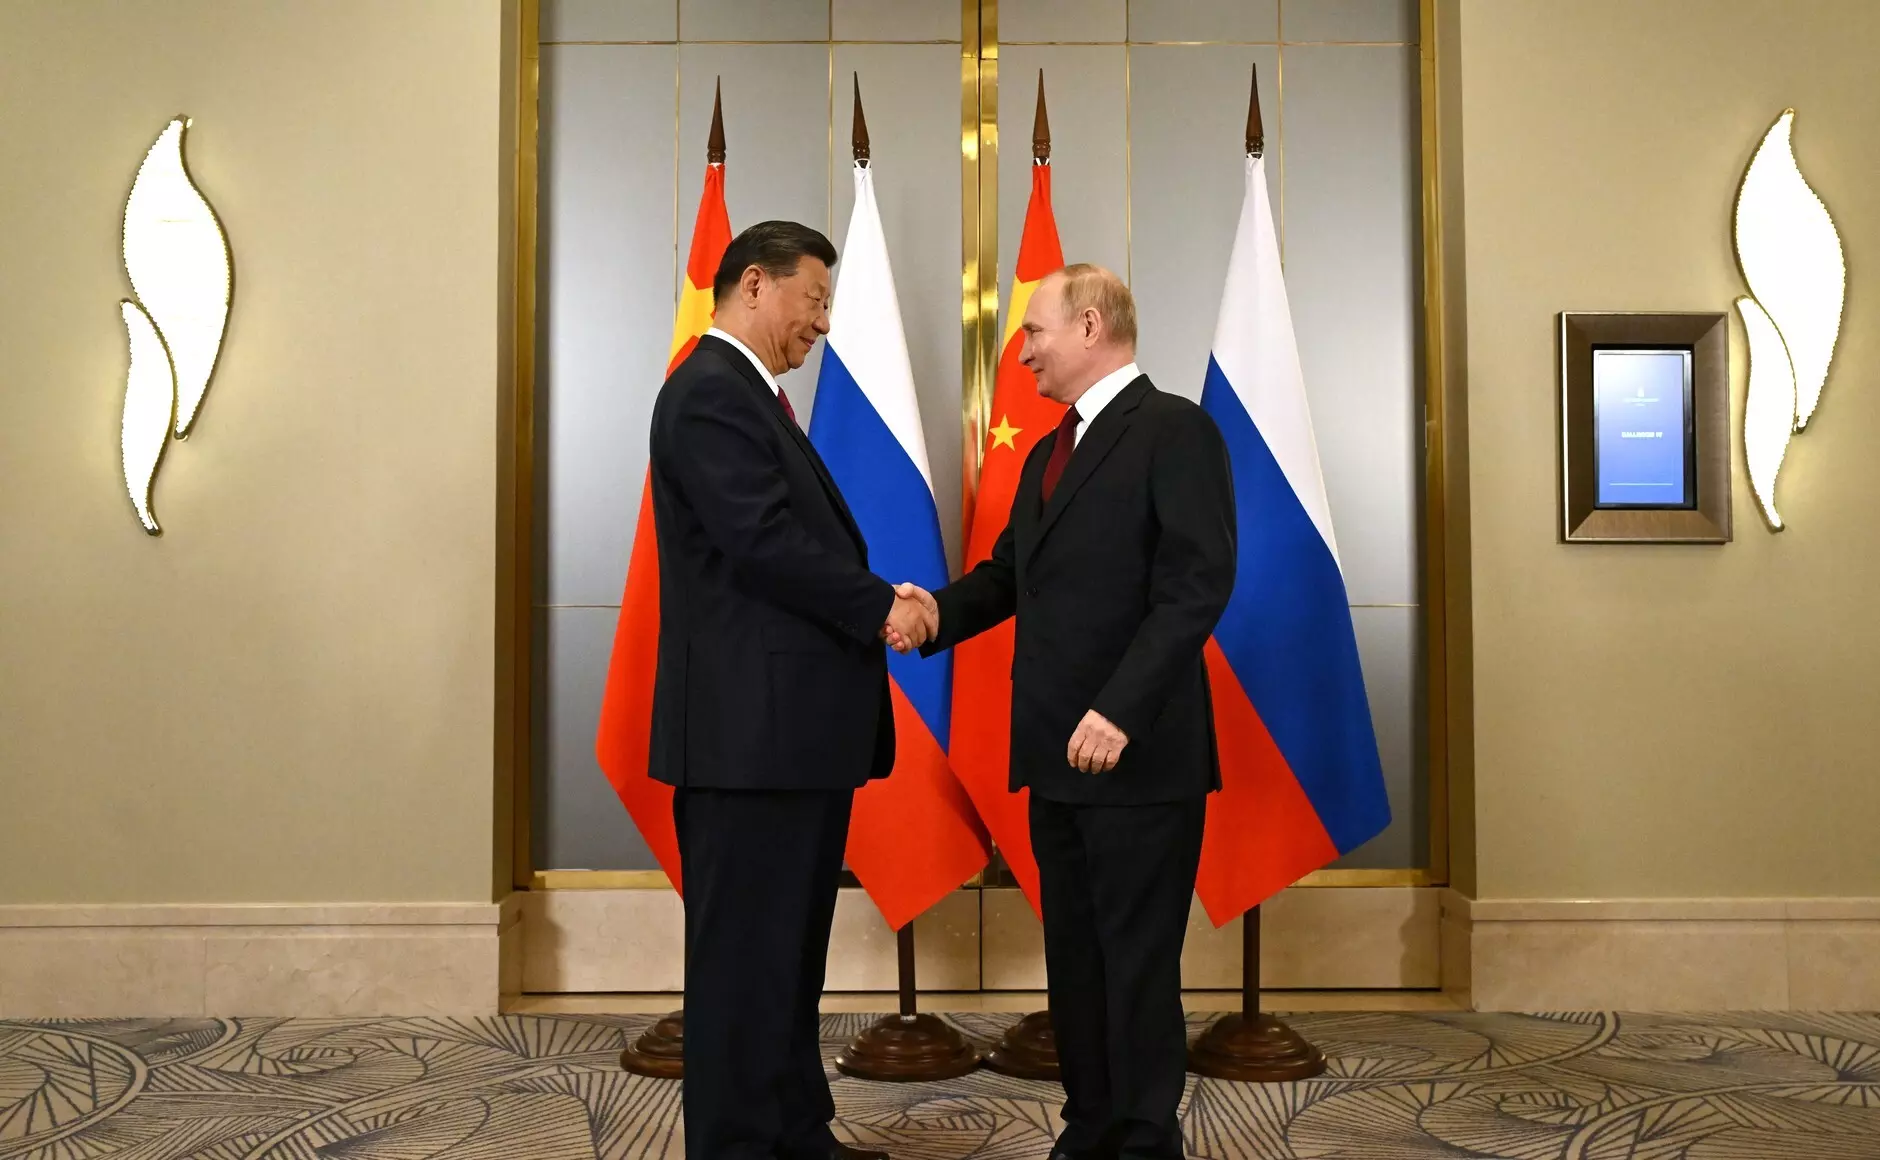 Rusia afianza su liderazgo junto a China de un bloque euroasiático frente a Occidente